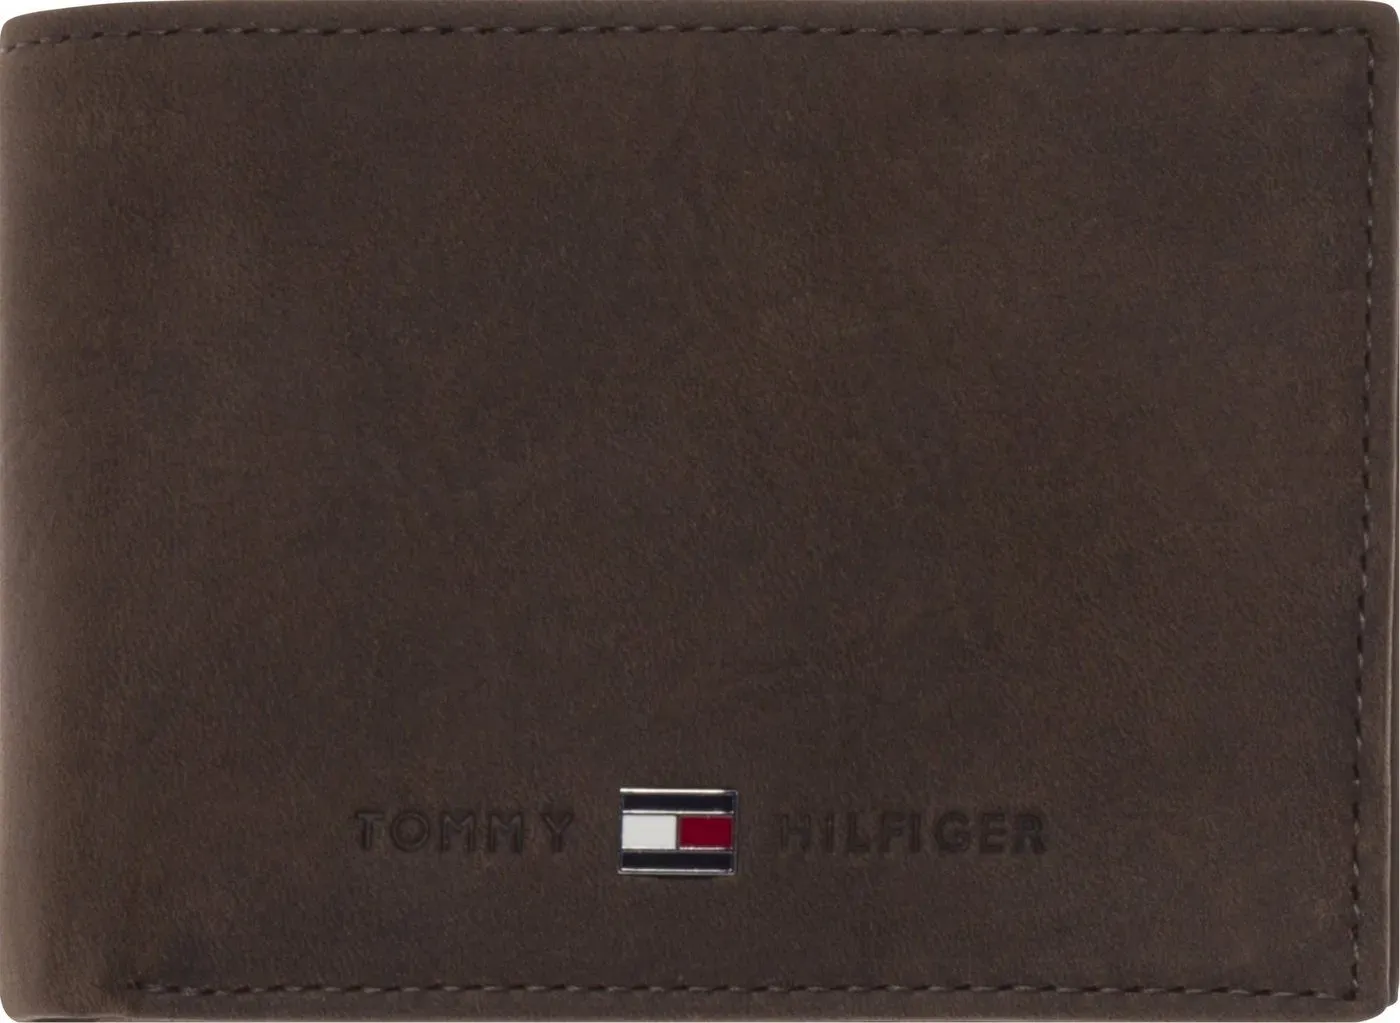 Tommy Hilfiger Geldbörse JOHNSON MINI CC FLAP COIN POCKET, aus hochwertigem Leder braun